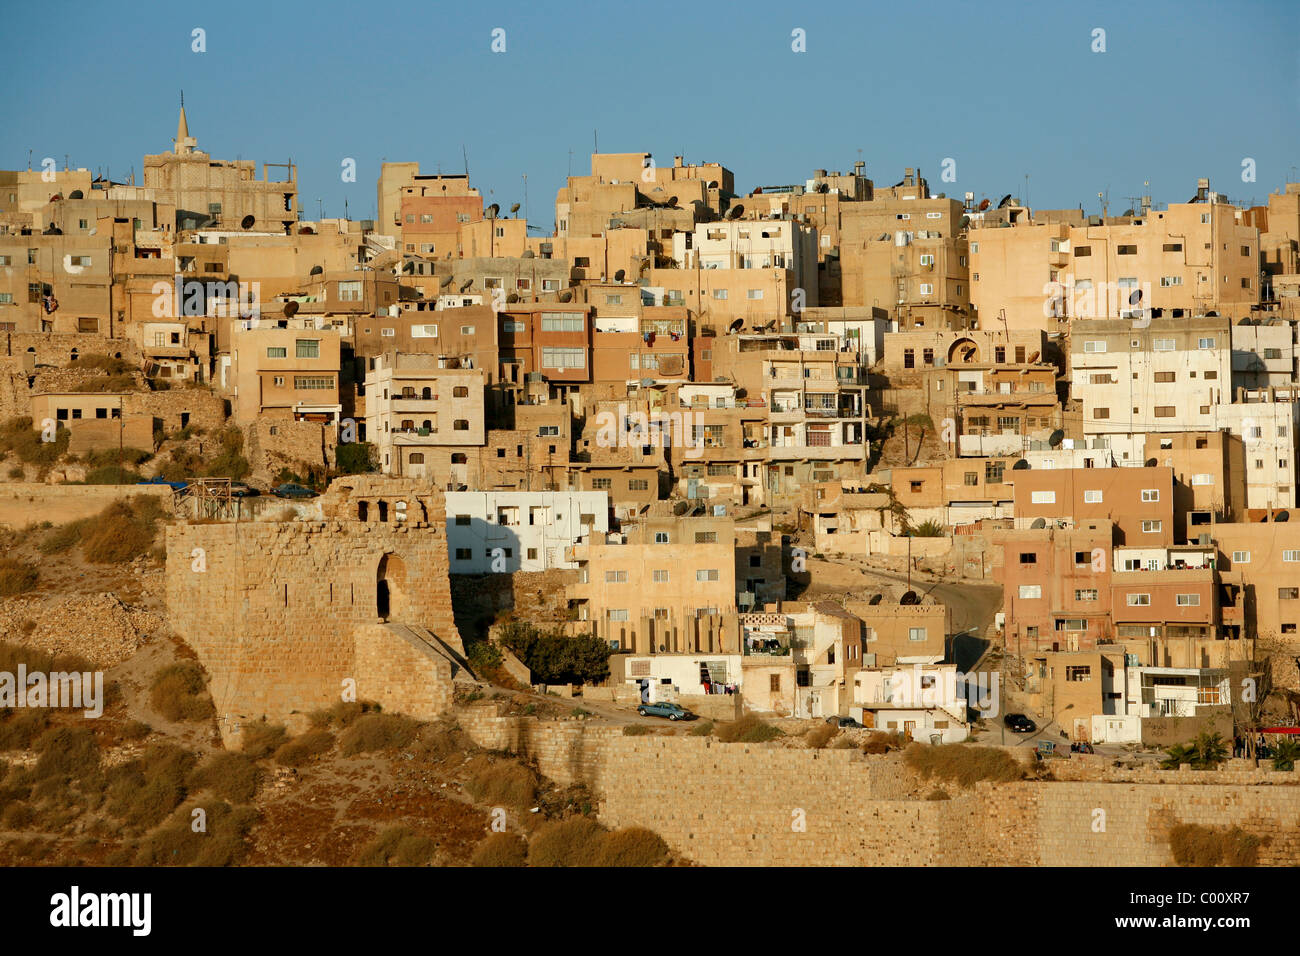 View over the old city of Karak, Jordan. Stock Photo